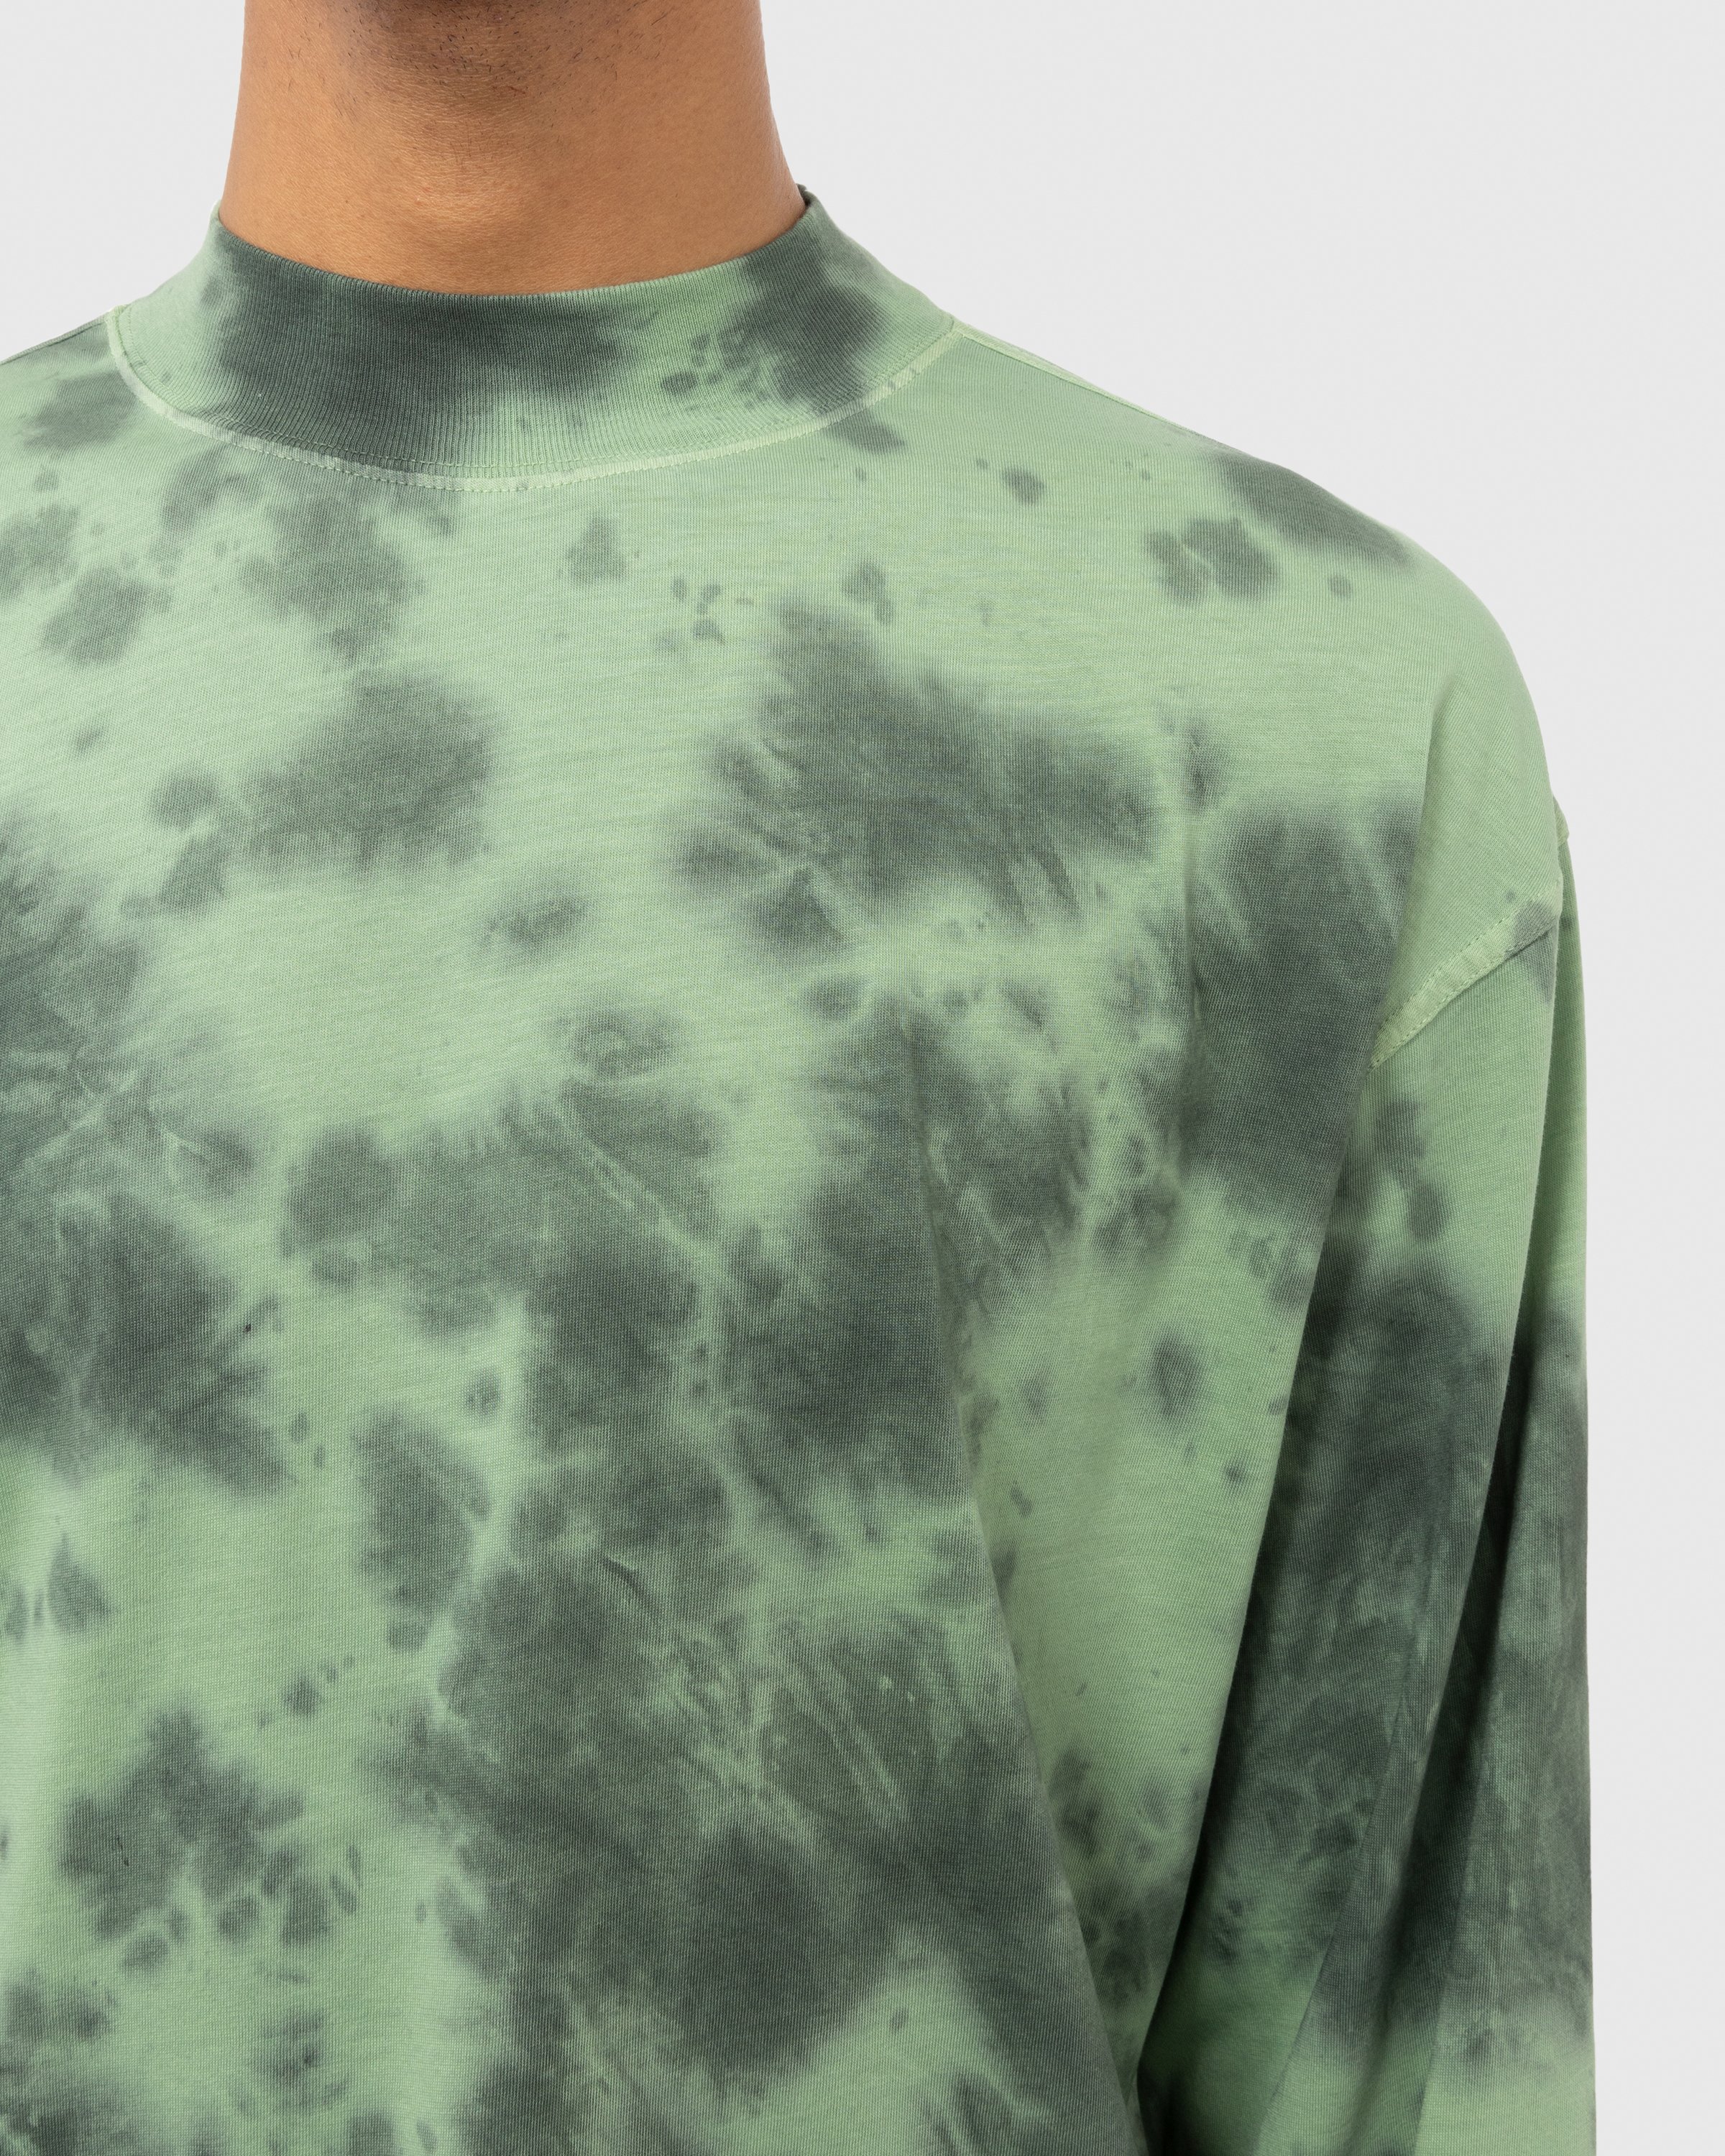 Dries van Noten - Heger T-Shirt Green - Clothing - Green - Image 5